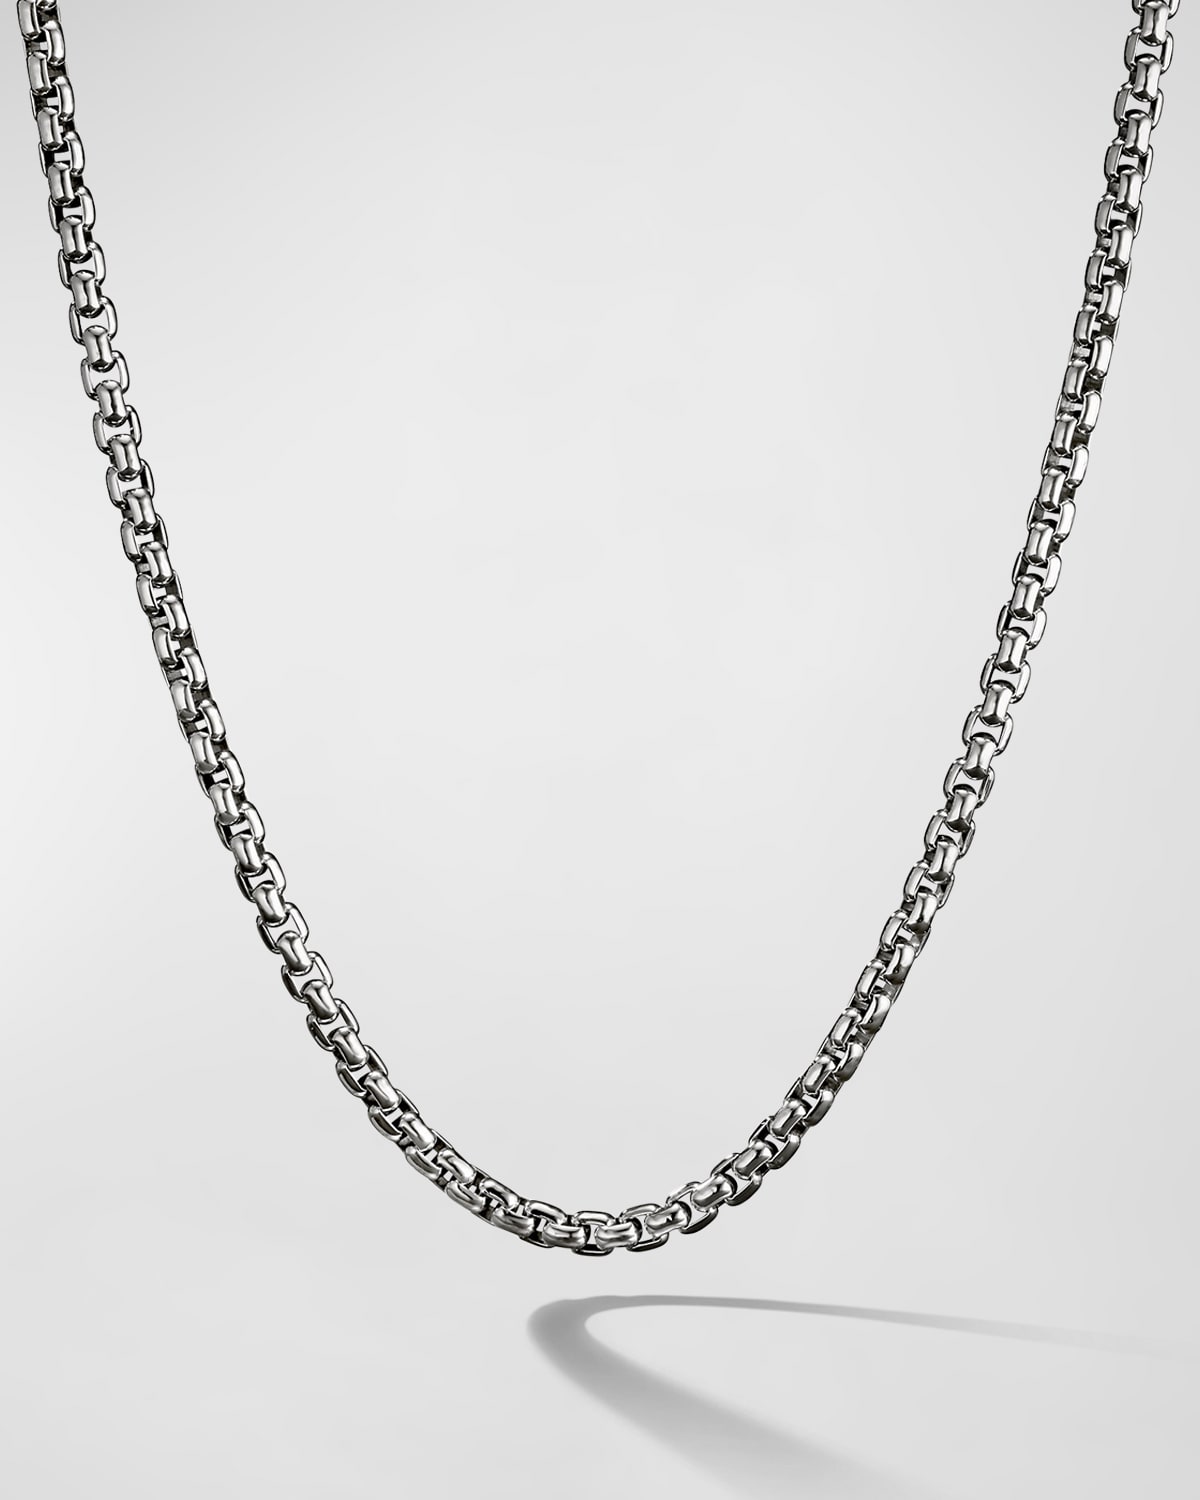 David Yurman Men's Box Chain Necklace in 18K Rose Gold, 5mm, 24